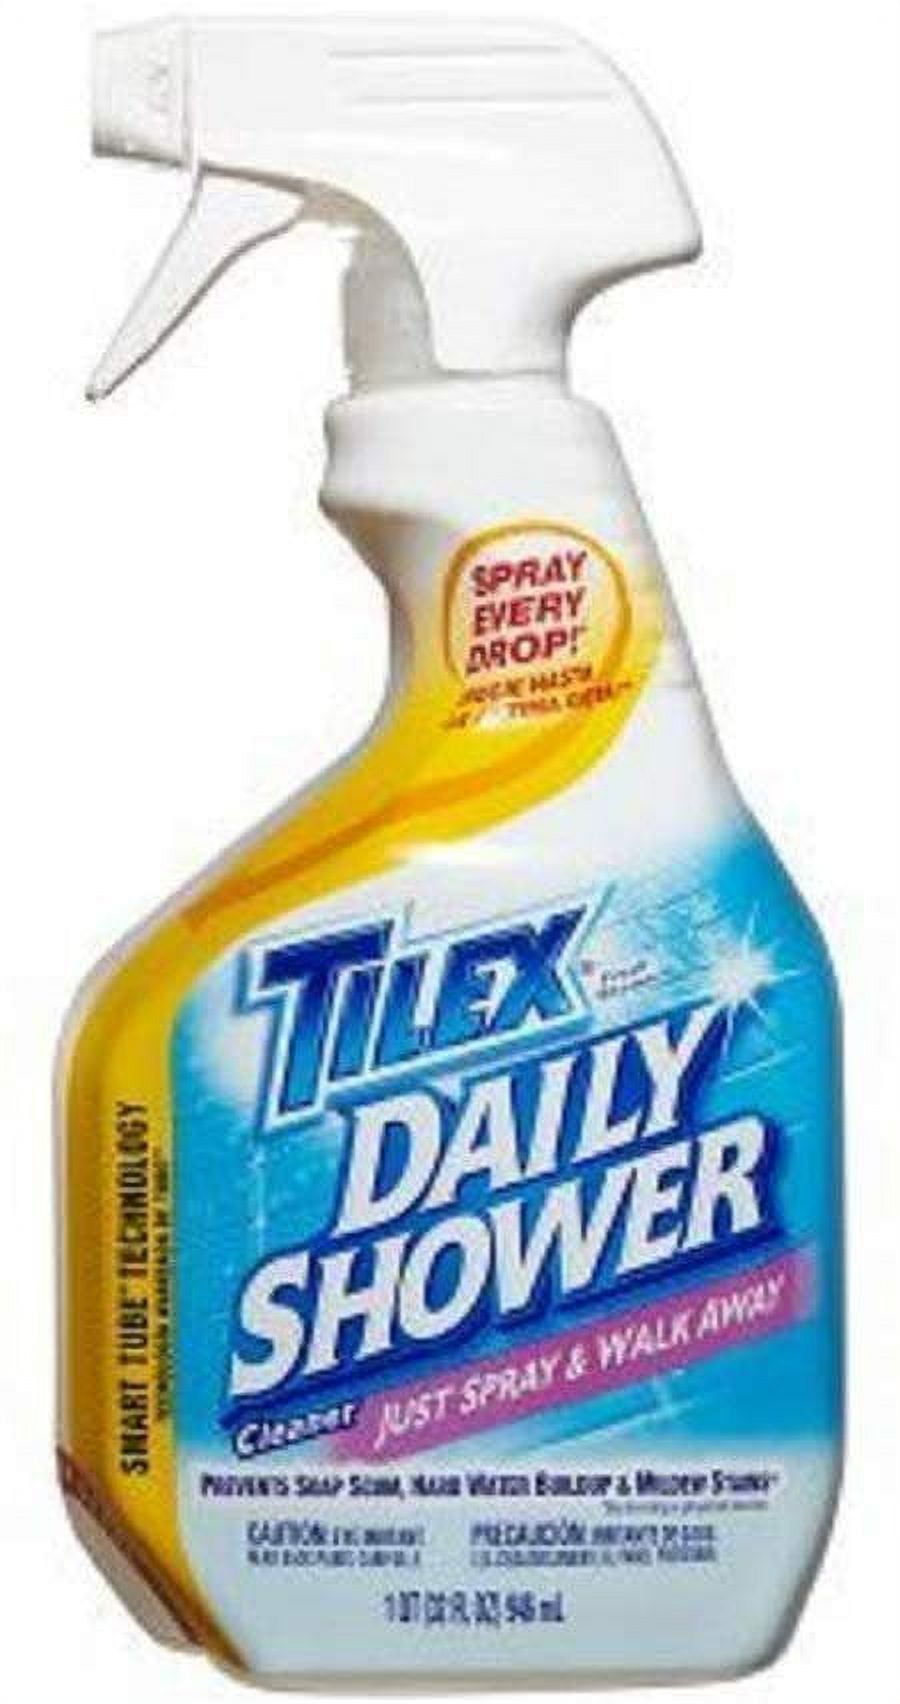 Tilex Clorox No Scent Daily Shower Cleaner 32 oz Liquid 01260